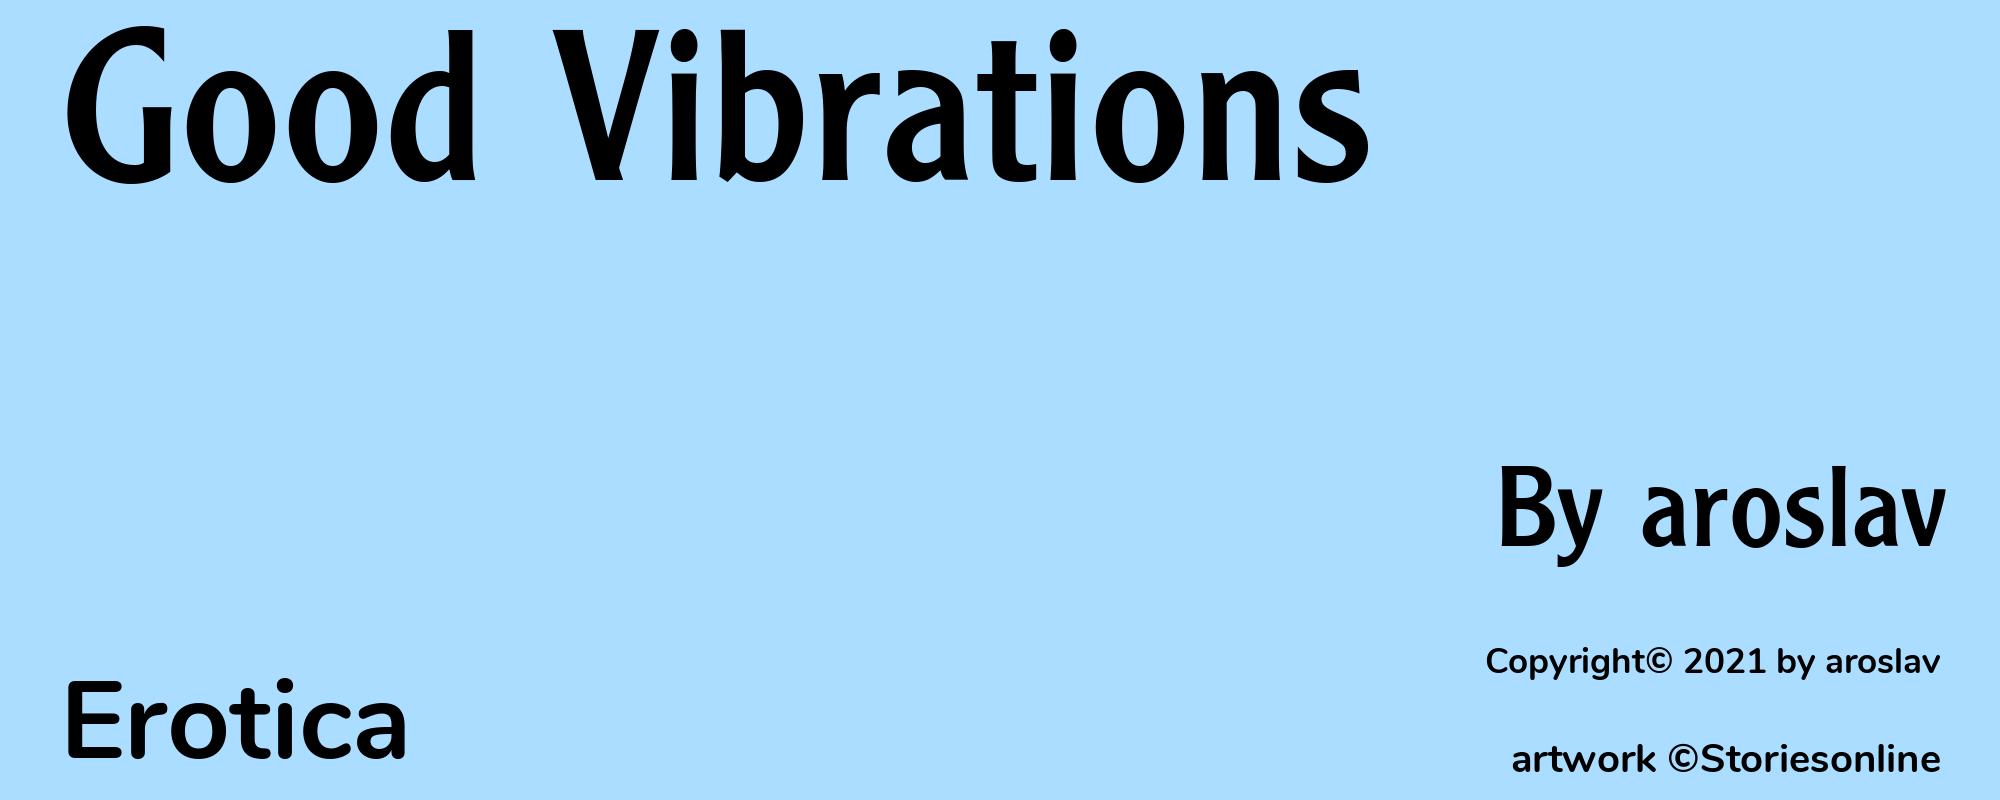 Good Vibrations - Cover